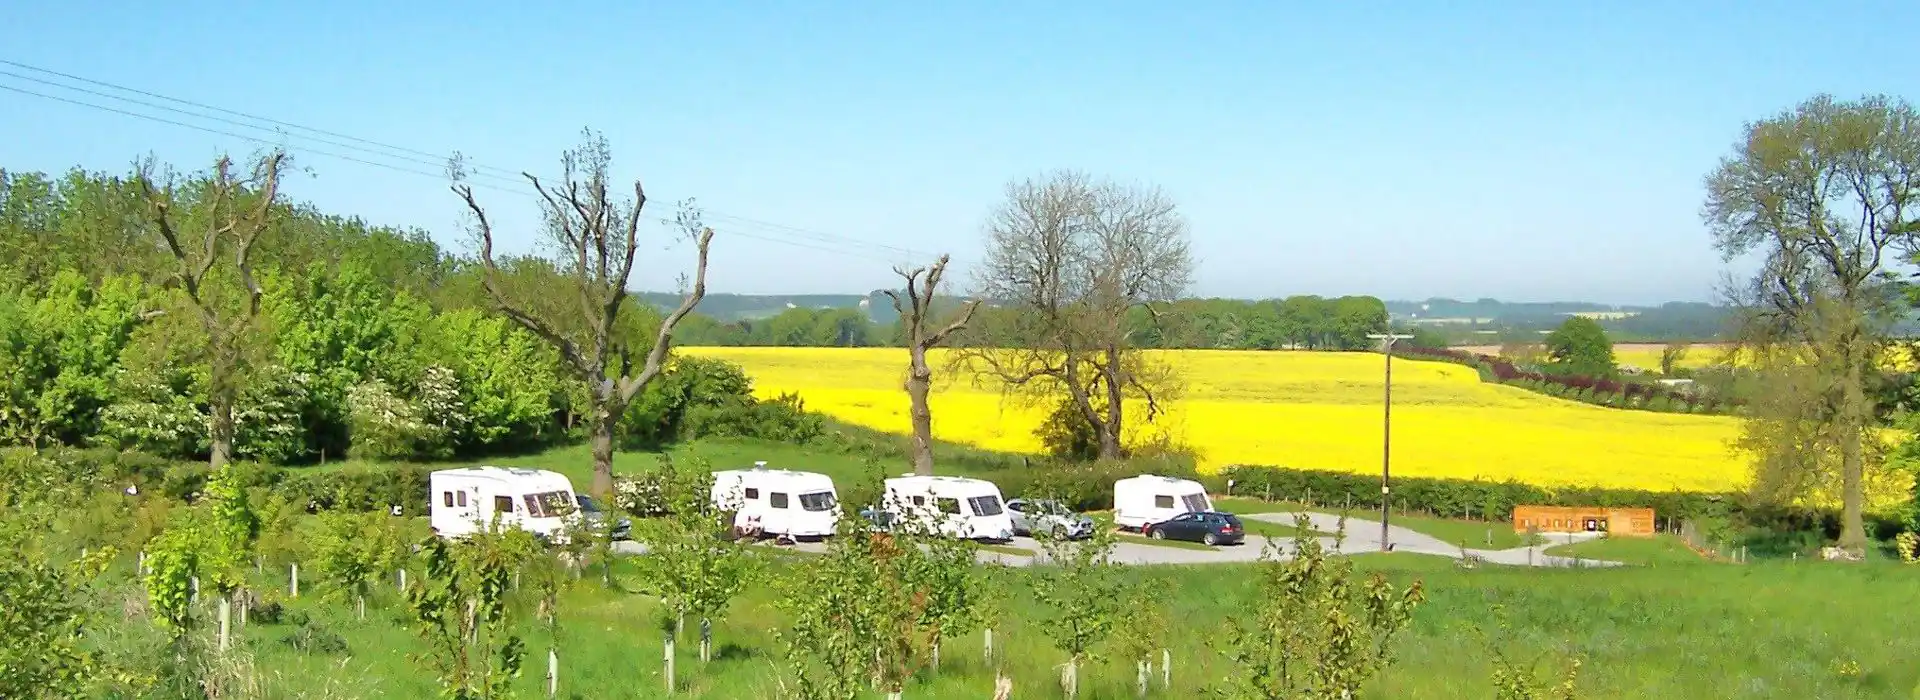 Caravan parks in Lincolnshire